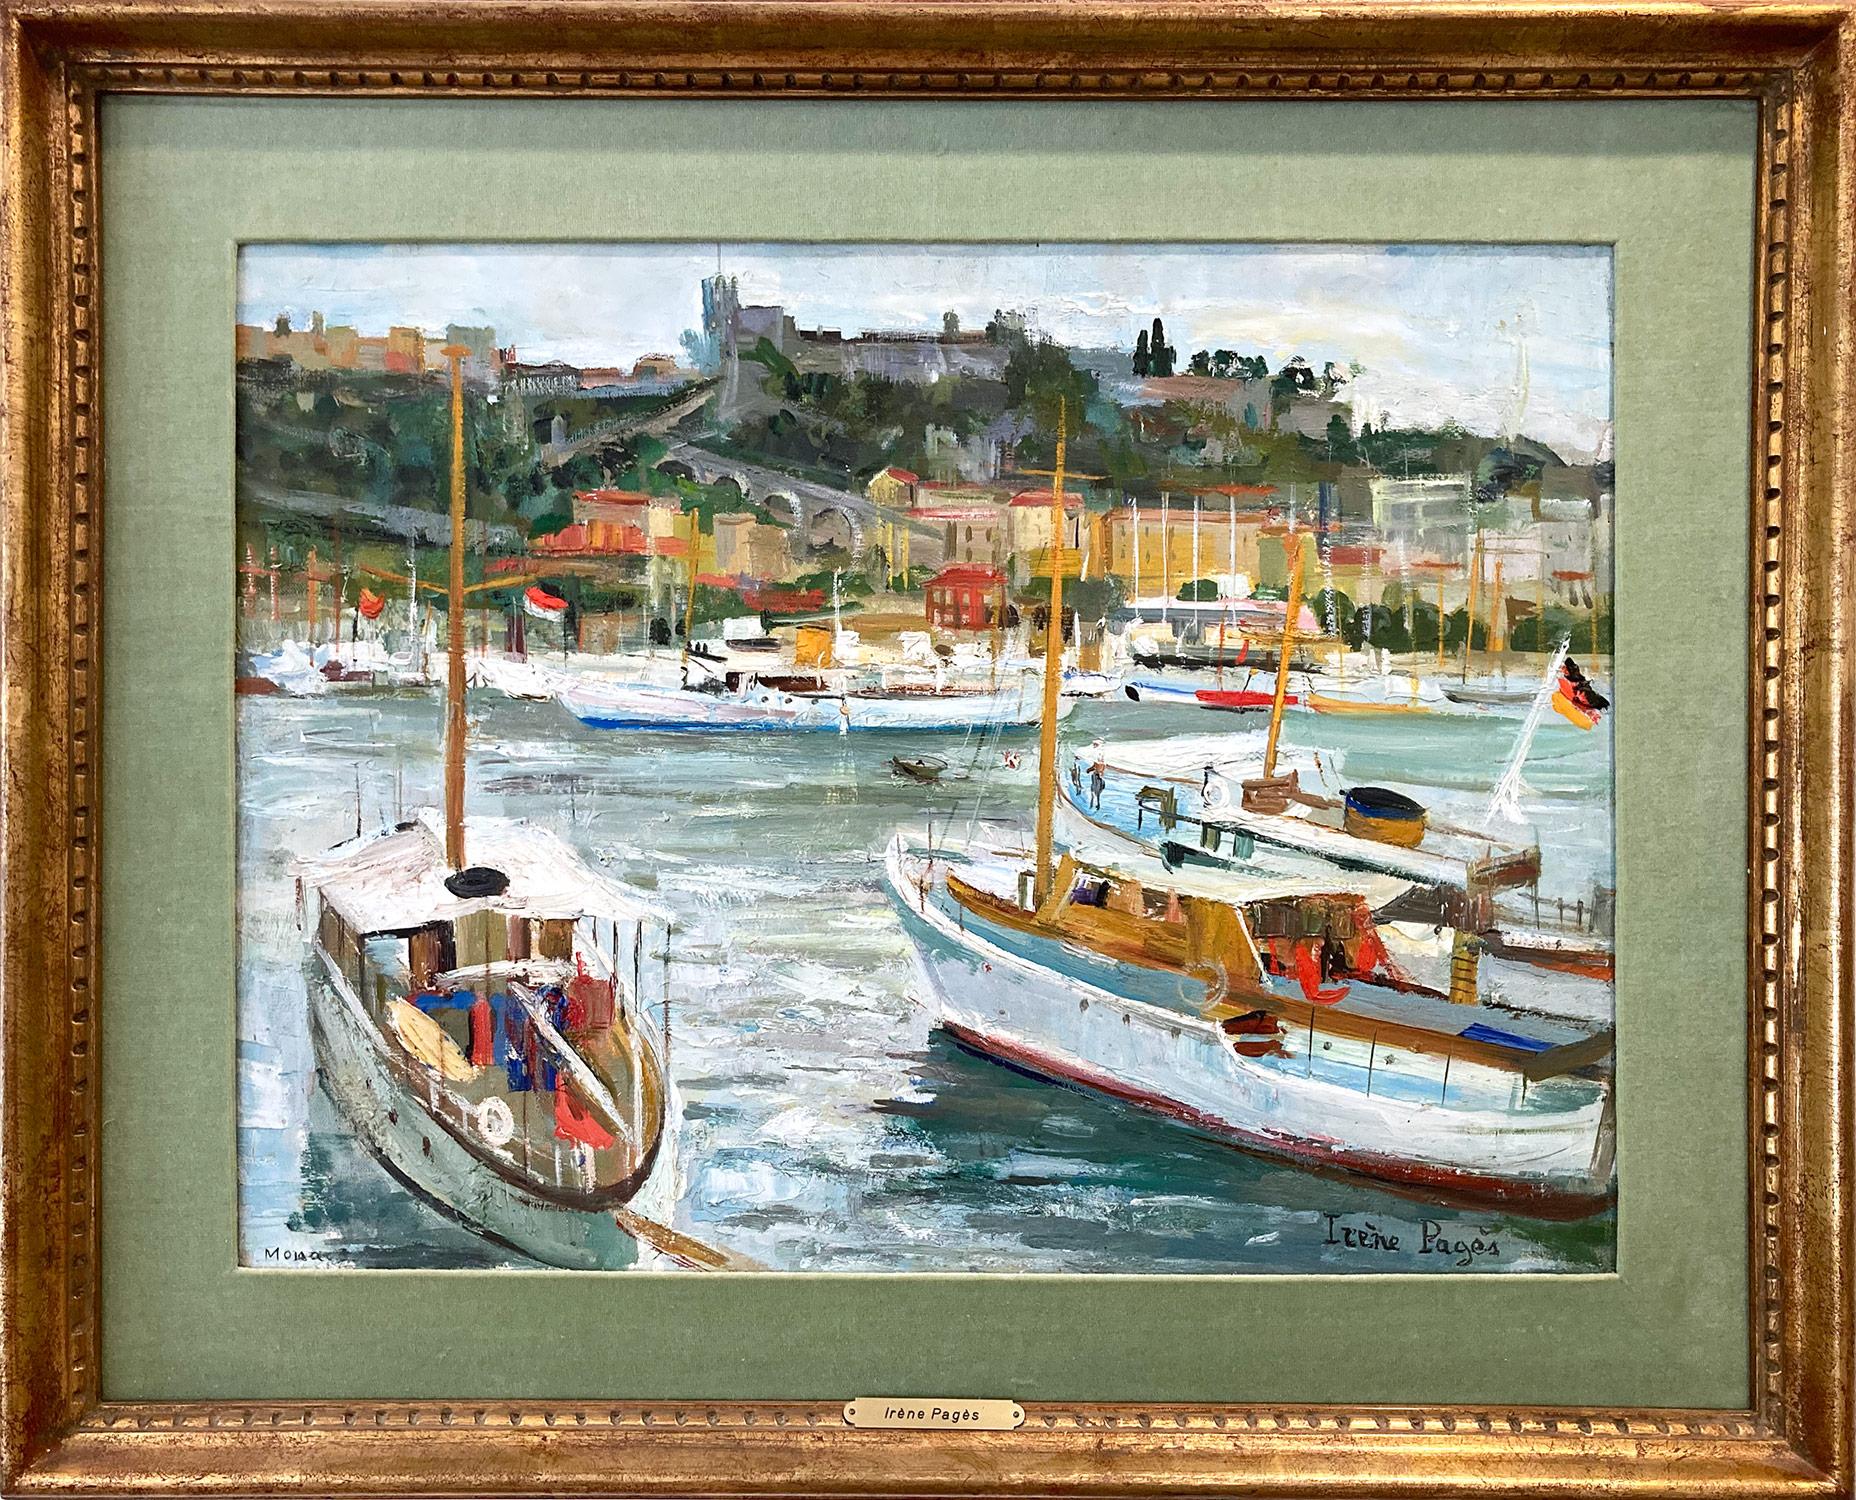 Irene Pages Landscape Painting - "Monaco" Cote D'azur Harbor Marine Scene Impressionist Oil on Canvas Painting